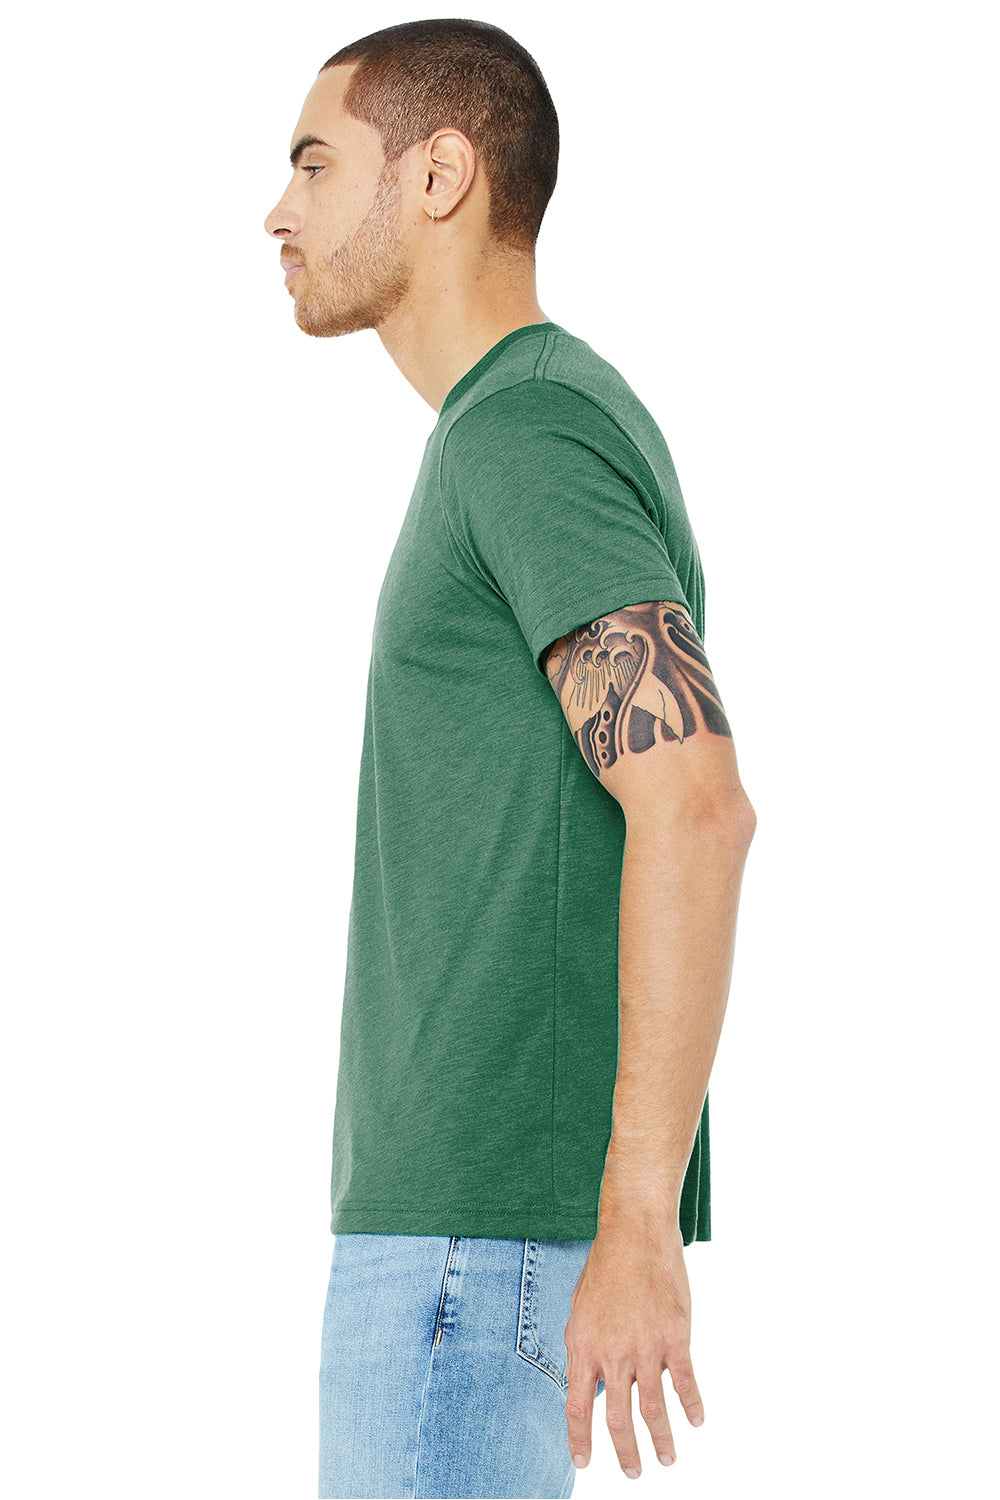 Bella + Canvas BC3413/3413C/3413 Mens Short Sleeve Crewneck T-Shirt Grass Green Model Side